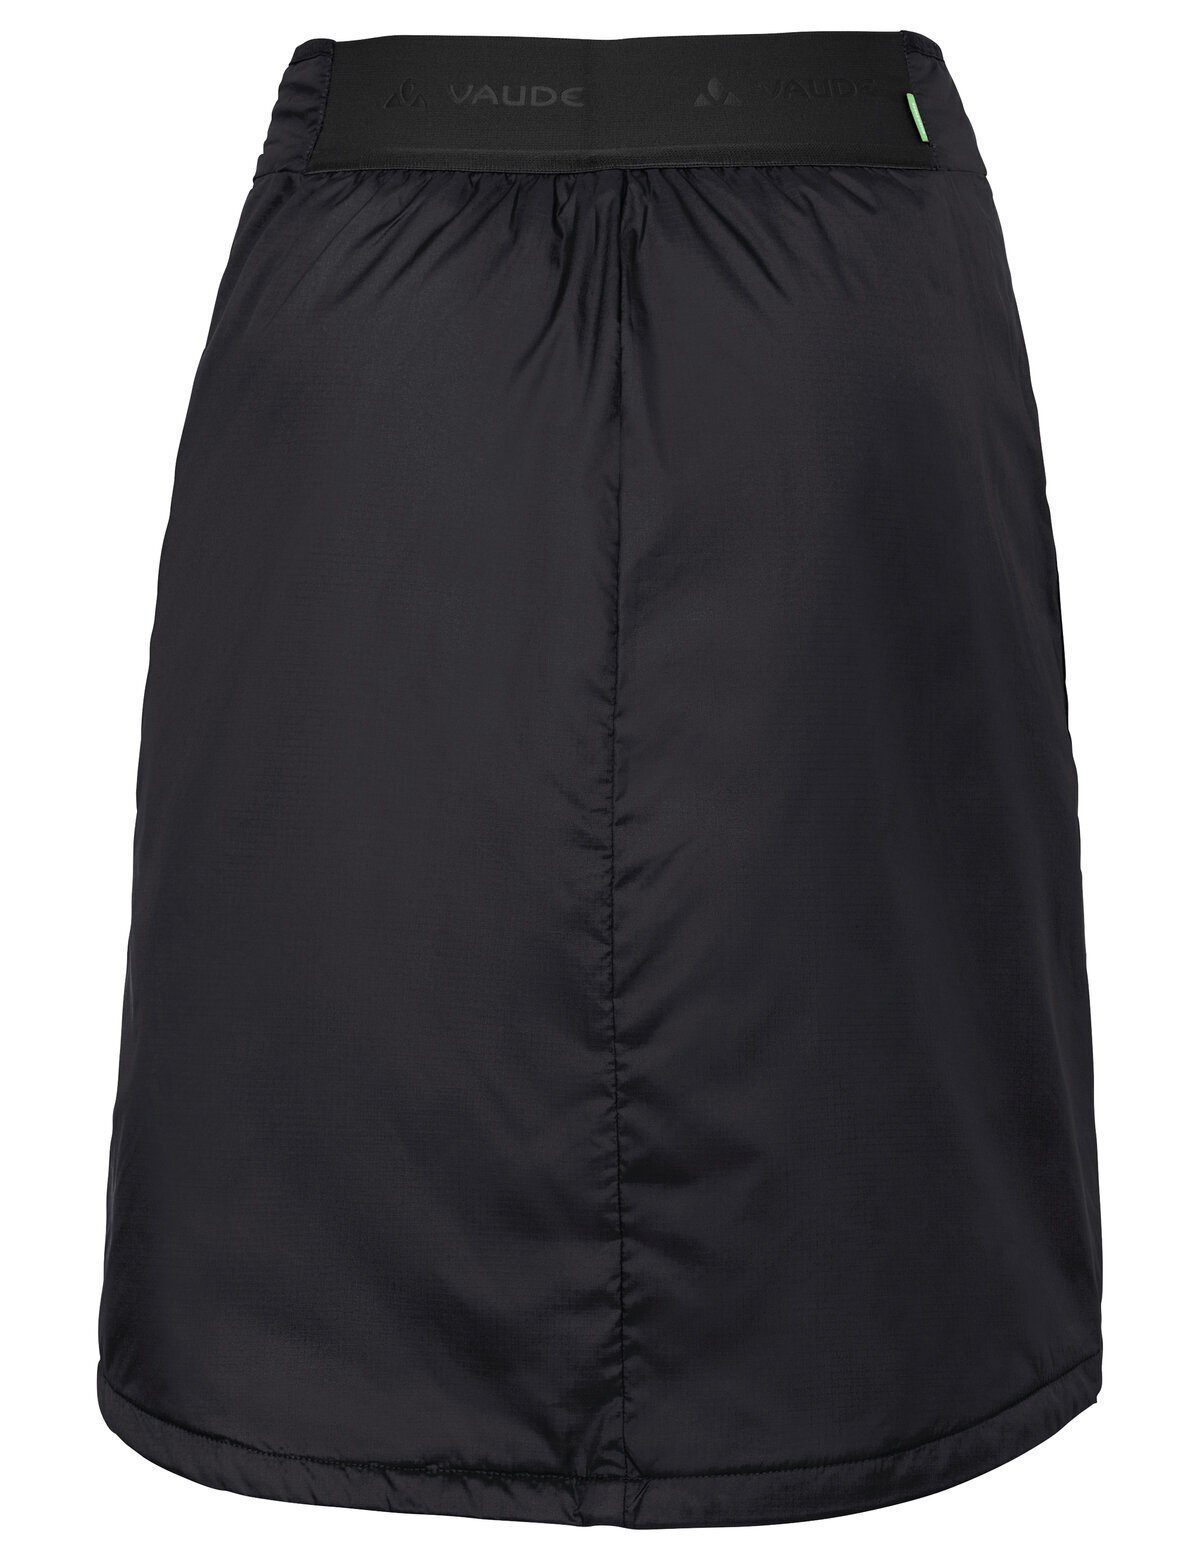 VAUDE Wickelrock black in Skirt Women's Neyland Unifarbe Padded